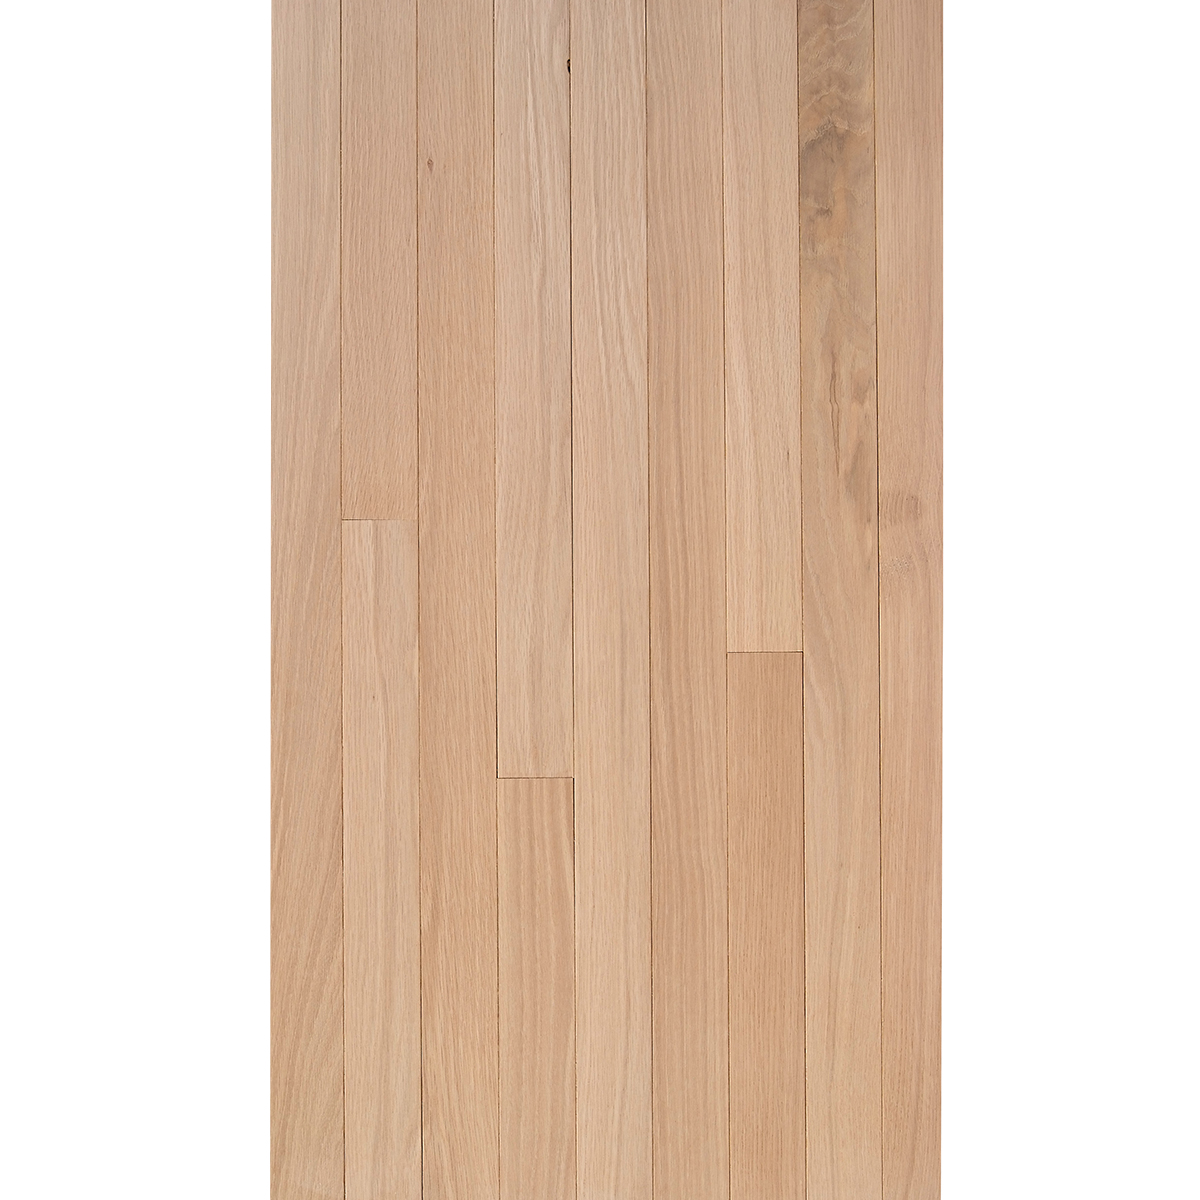 White Oak 3 4 X 2 1 Select Grade, 2 1 4 Oak Hardwood Flooring Unfinished